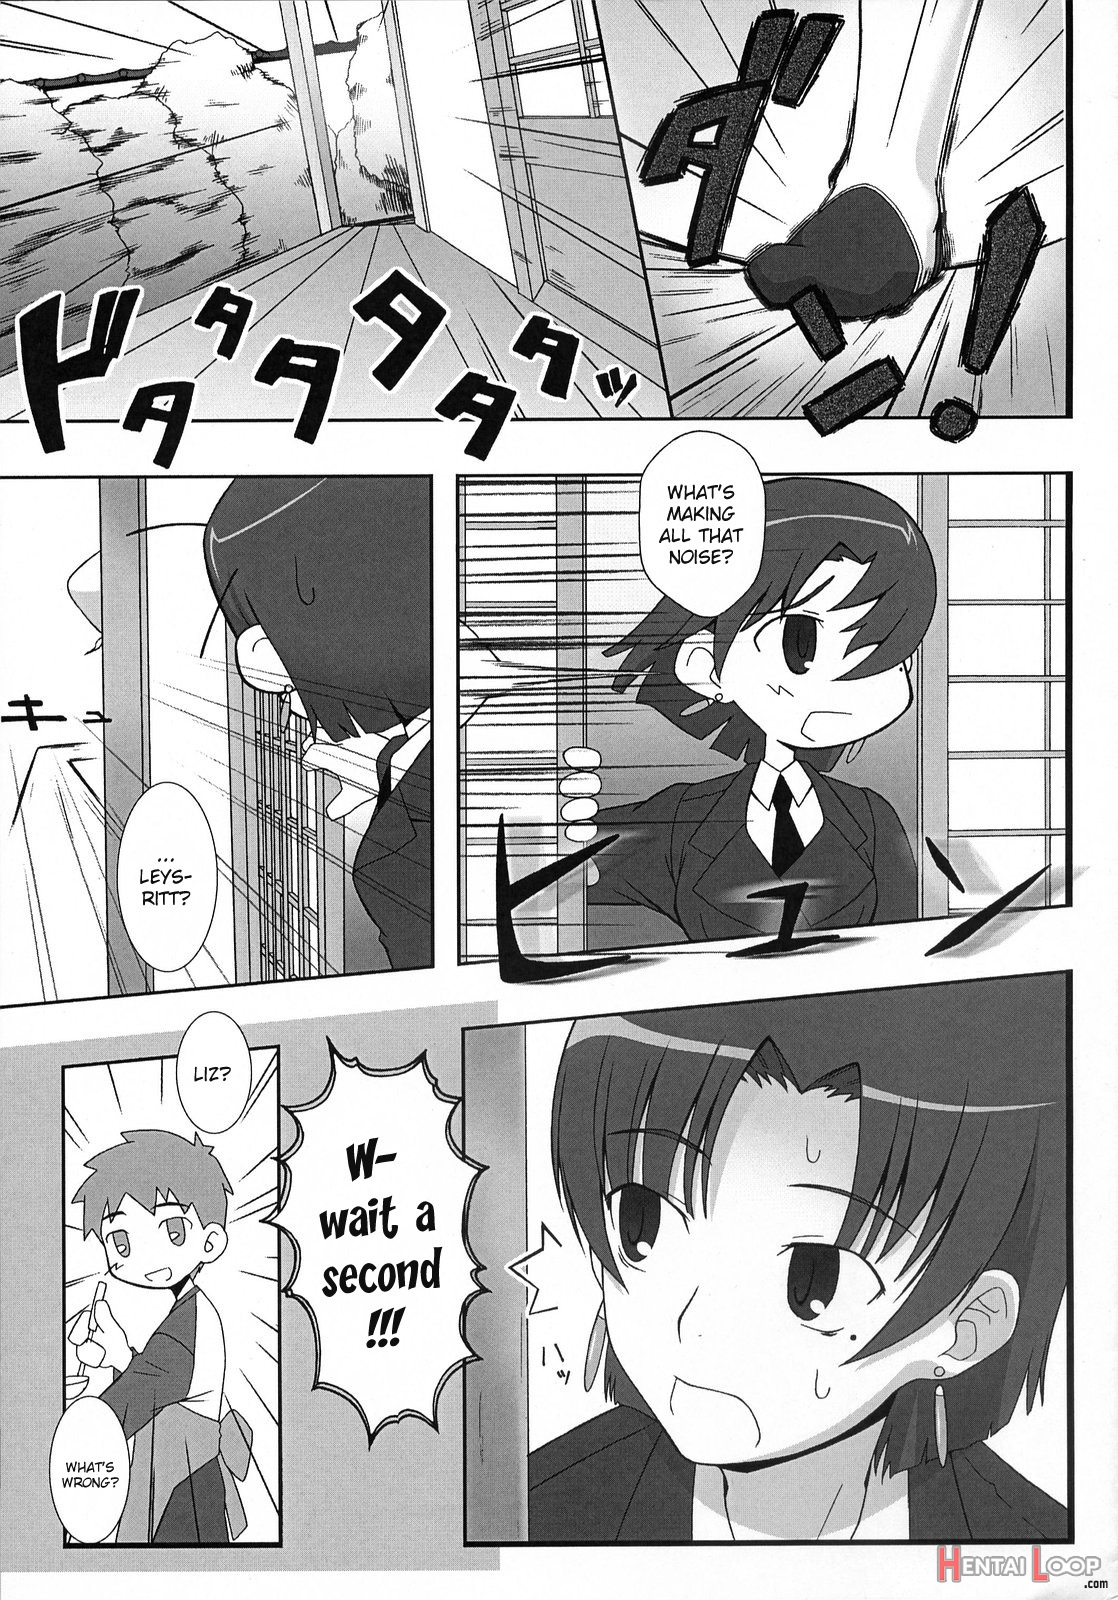 Fate/stay Night - Yappari Rizeitto page 3